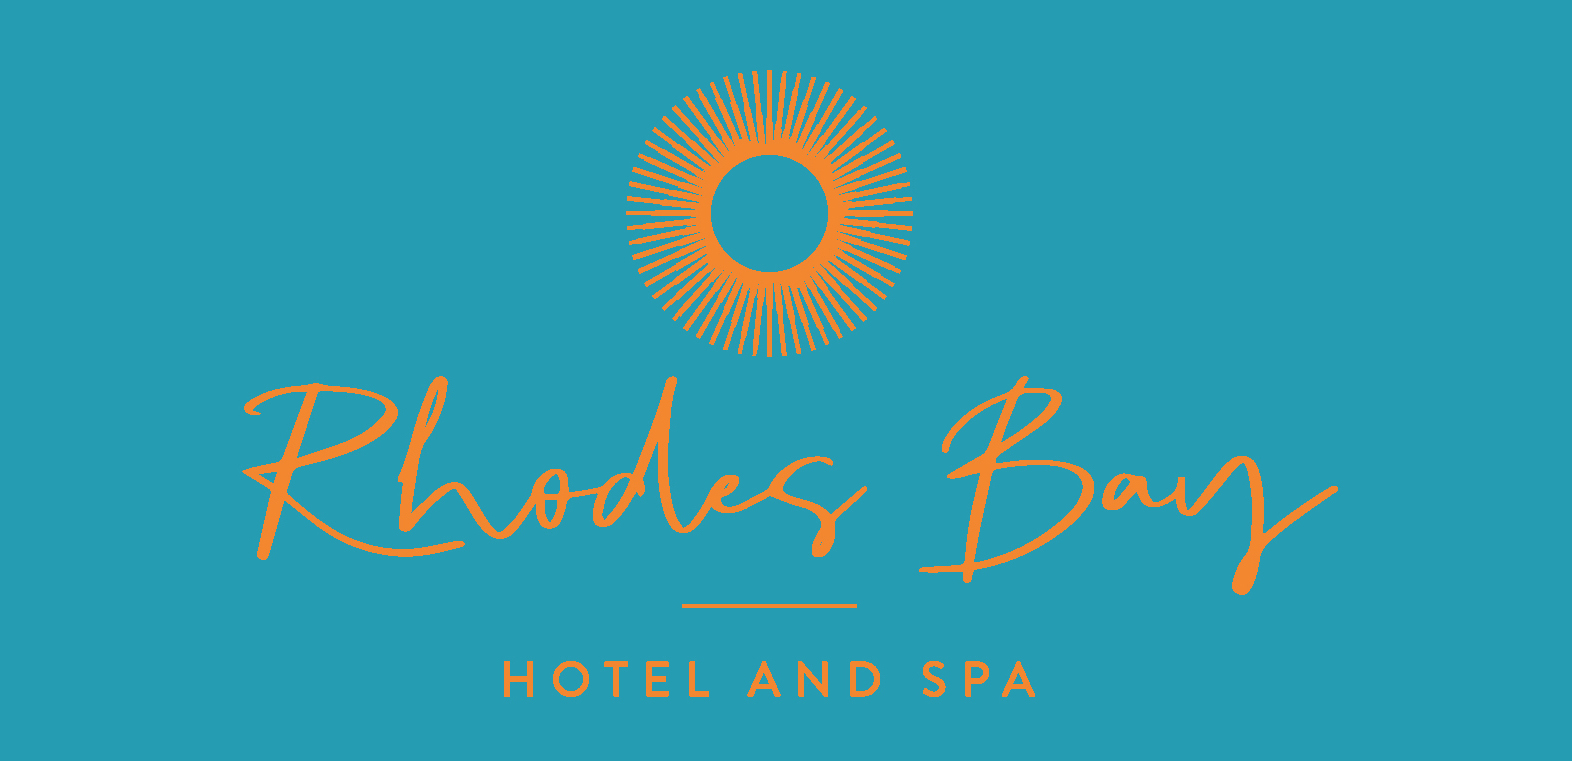 Rhodes bay logo